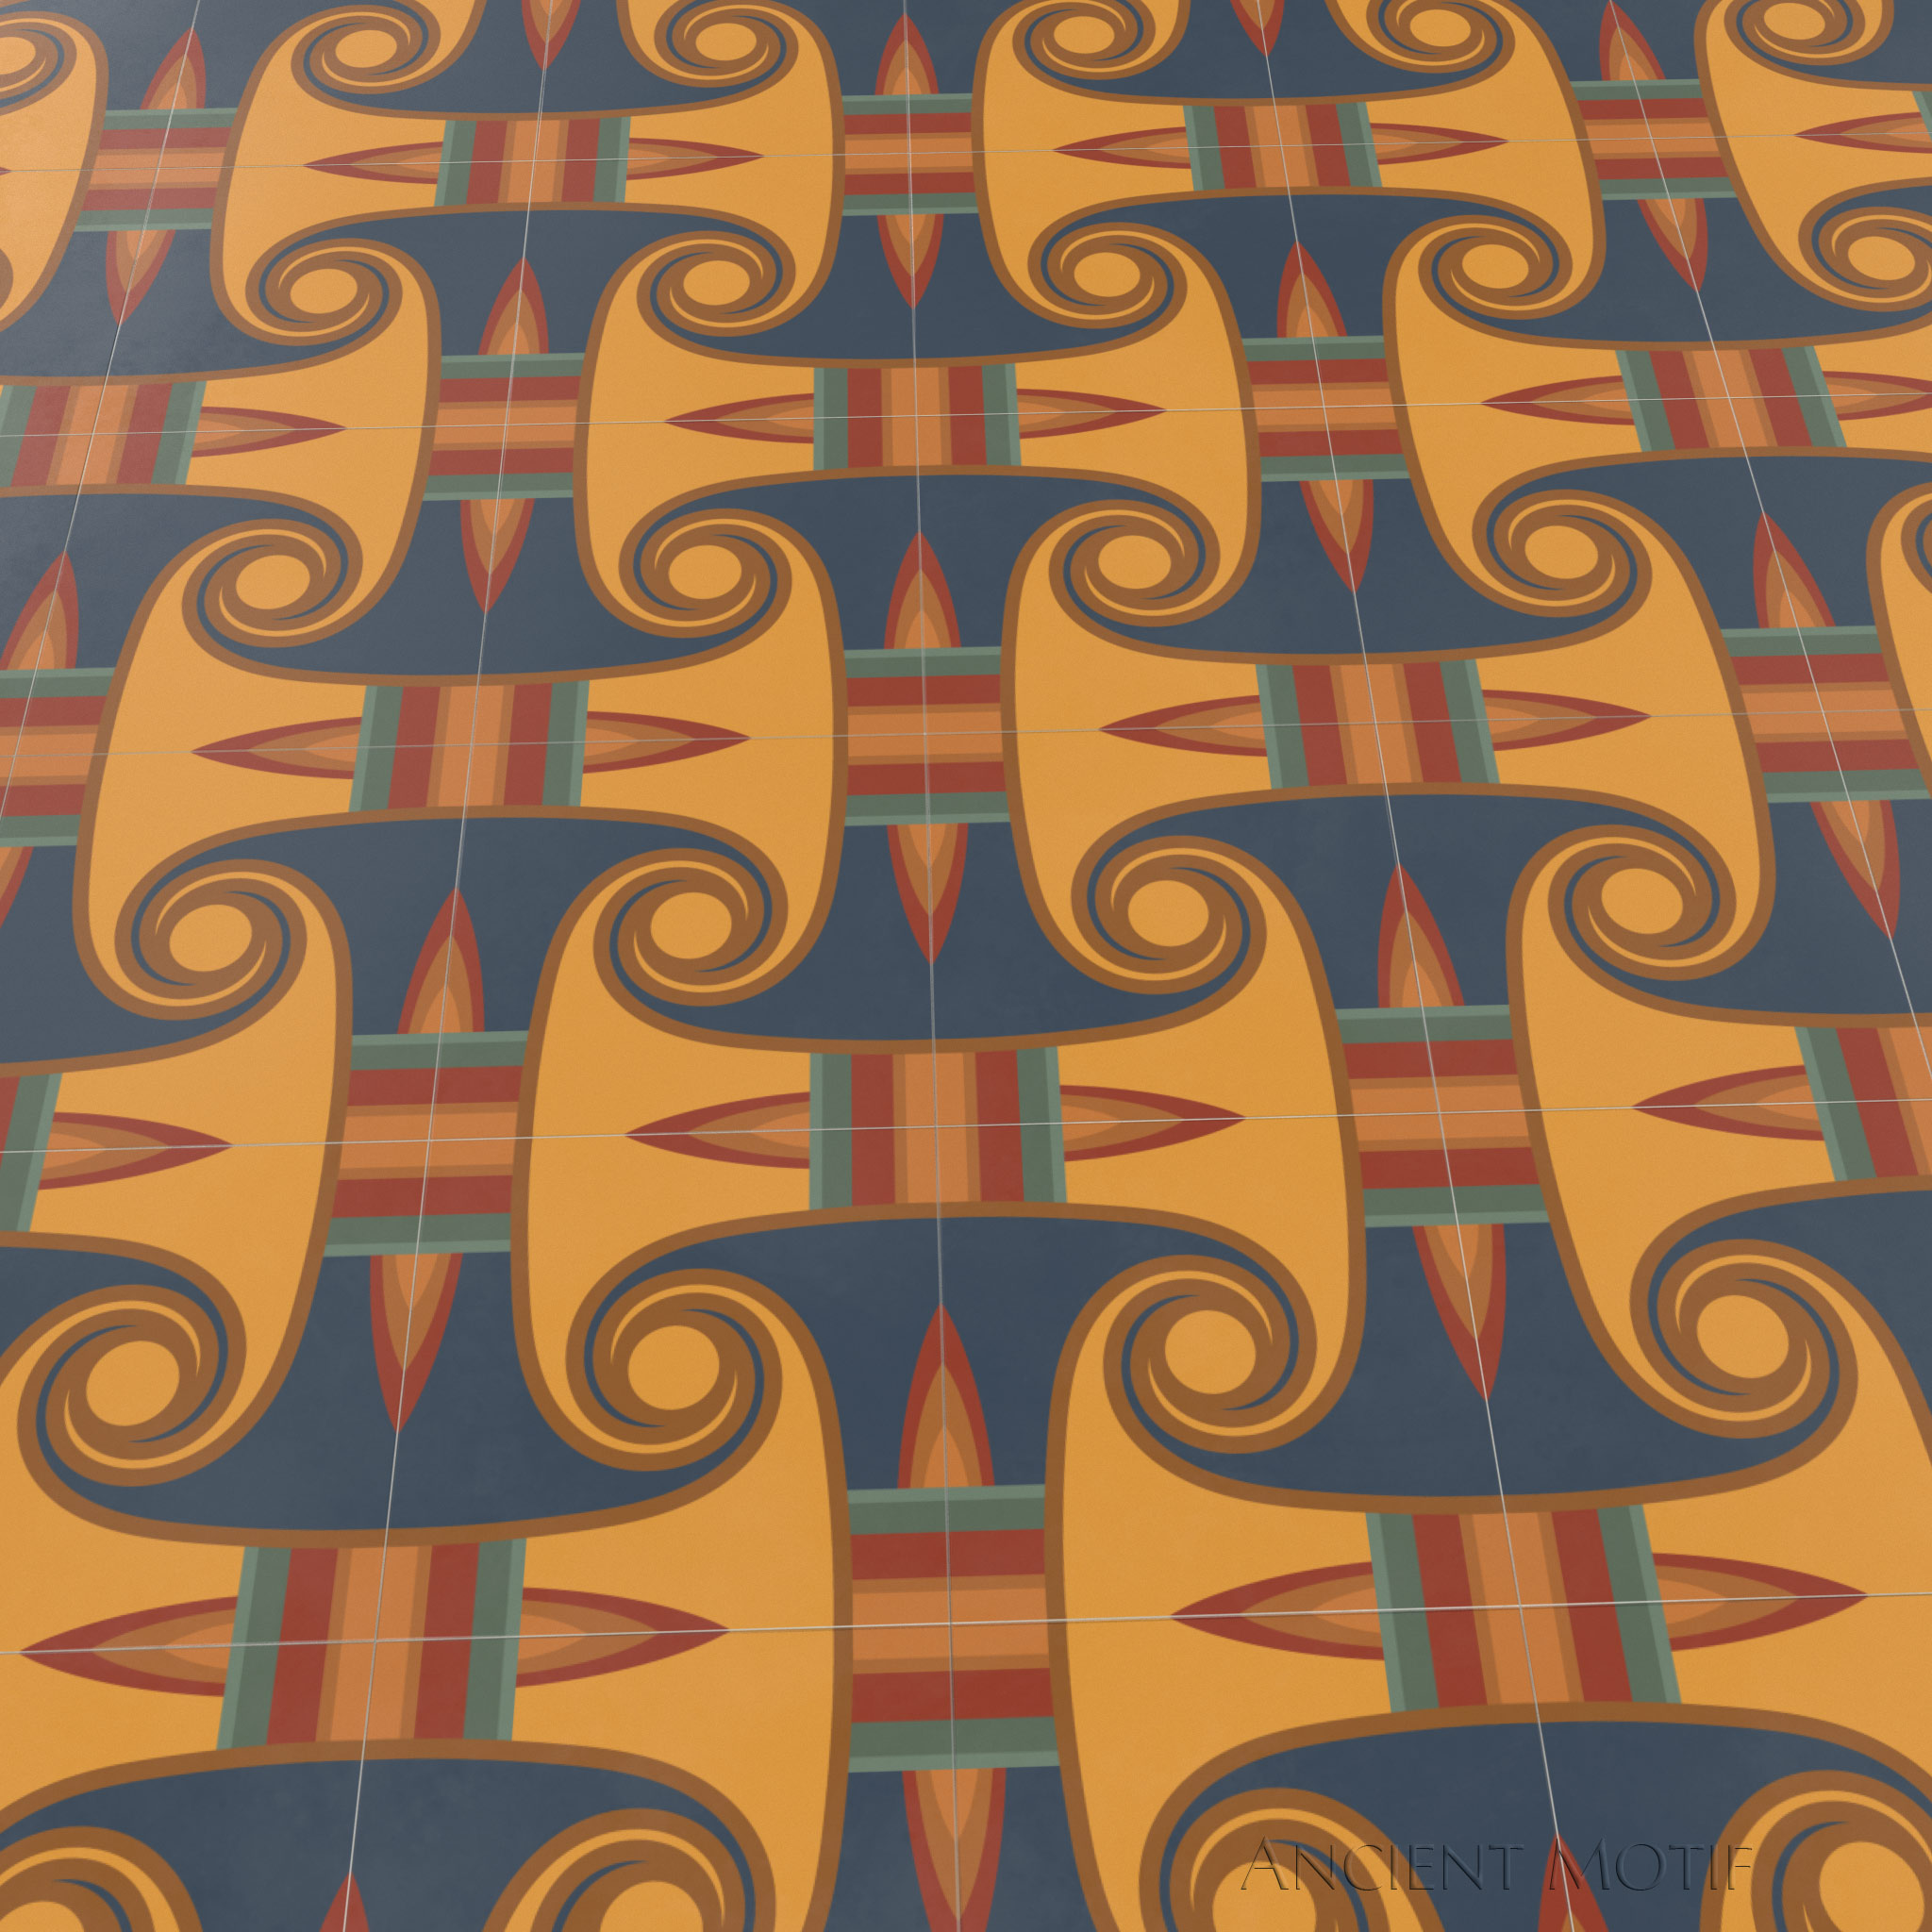 Zawty Cement Tile Floor with Edfu Border in Sunrise, Midnight and Jasper